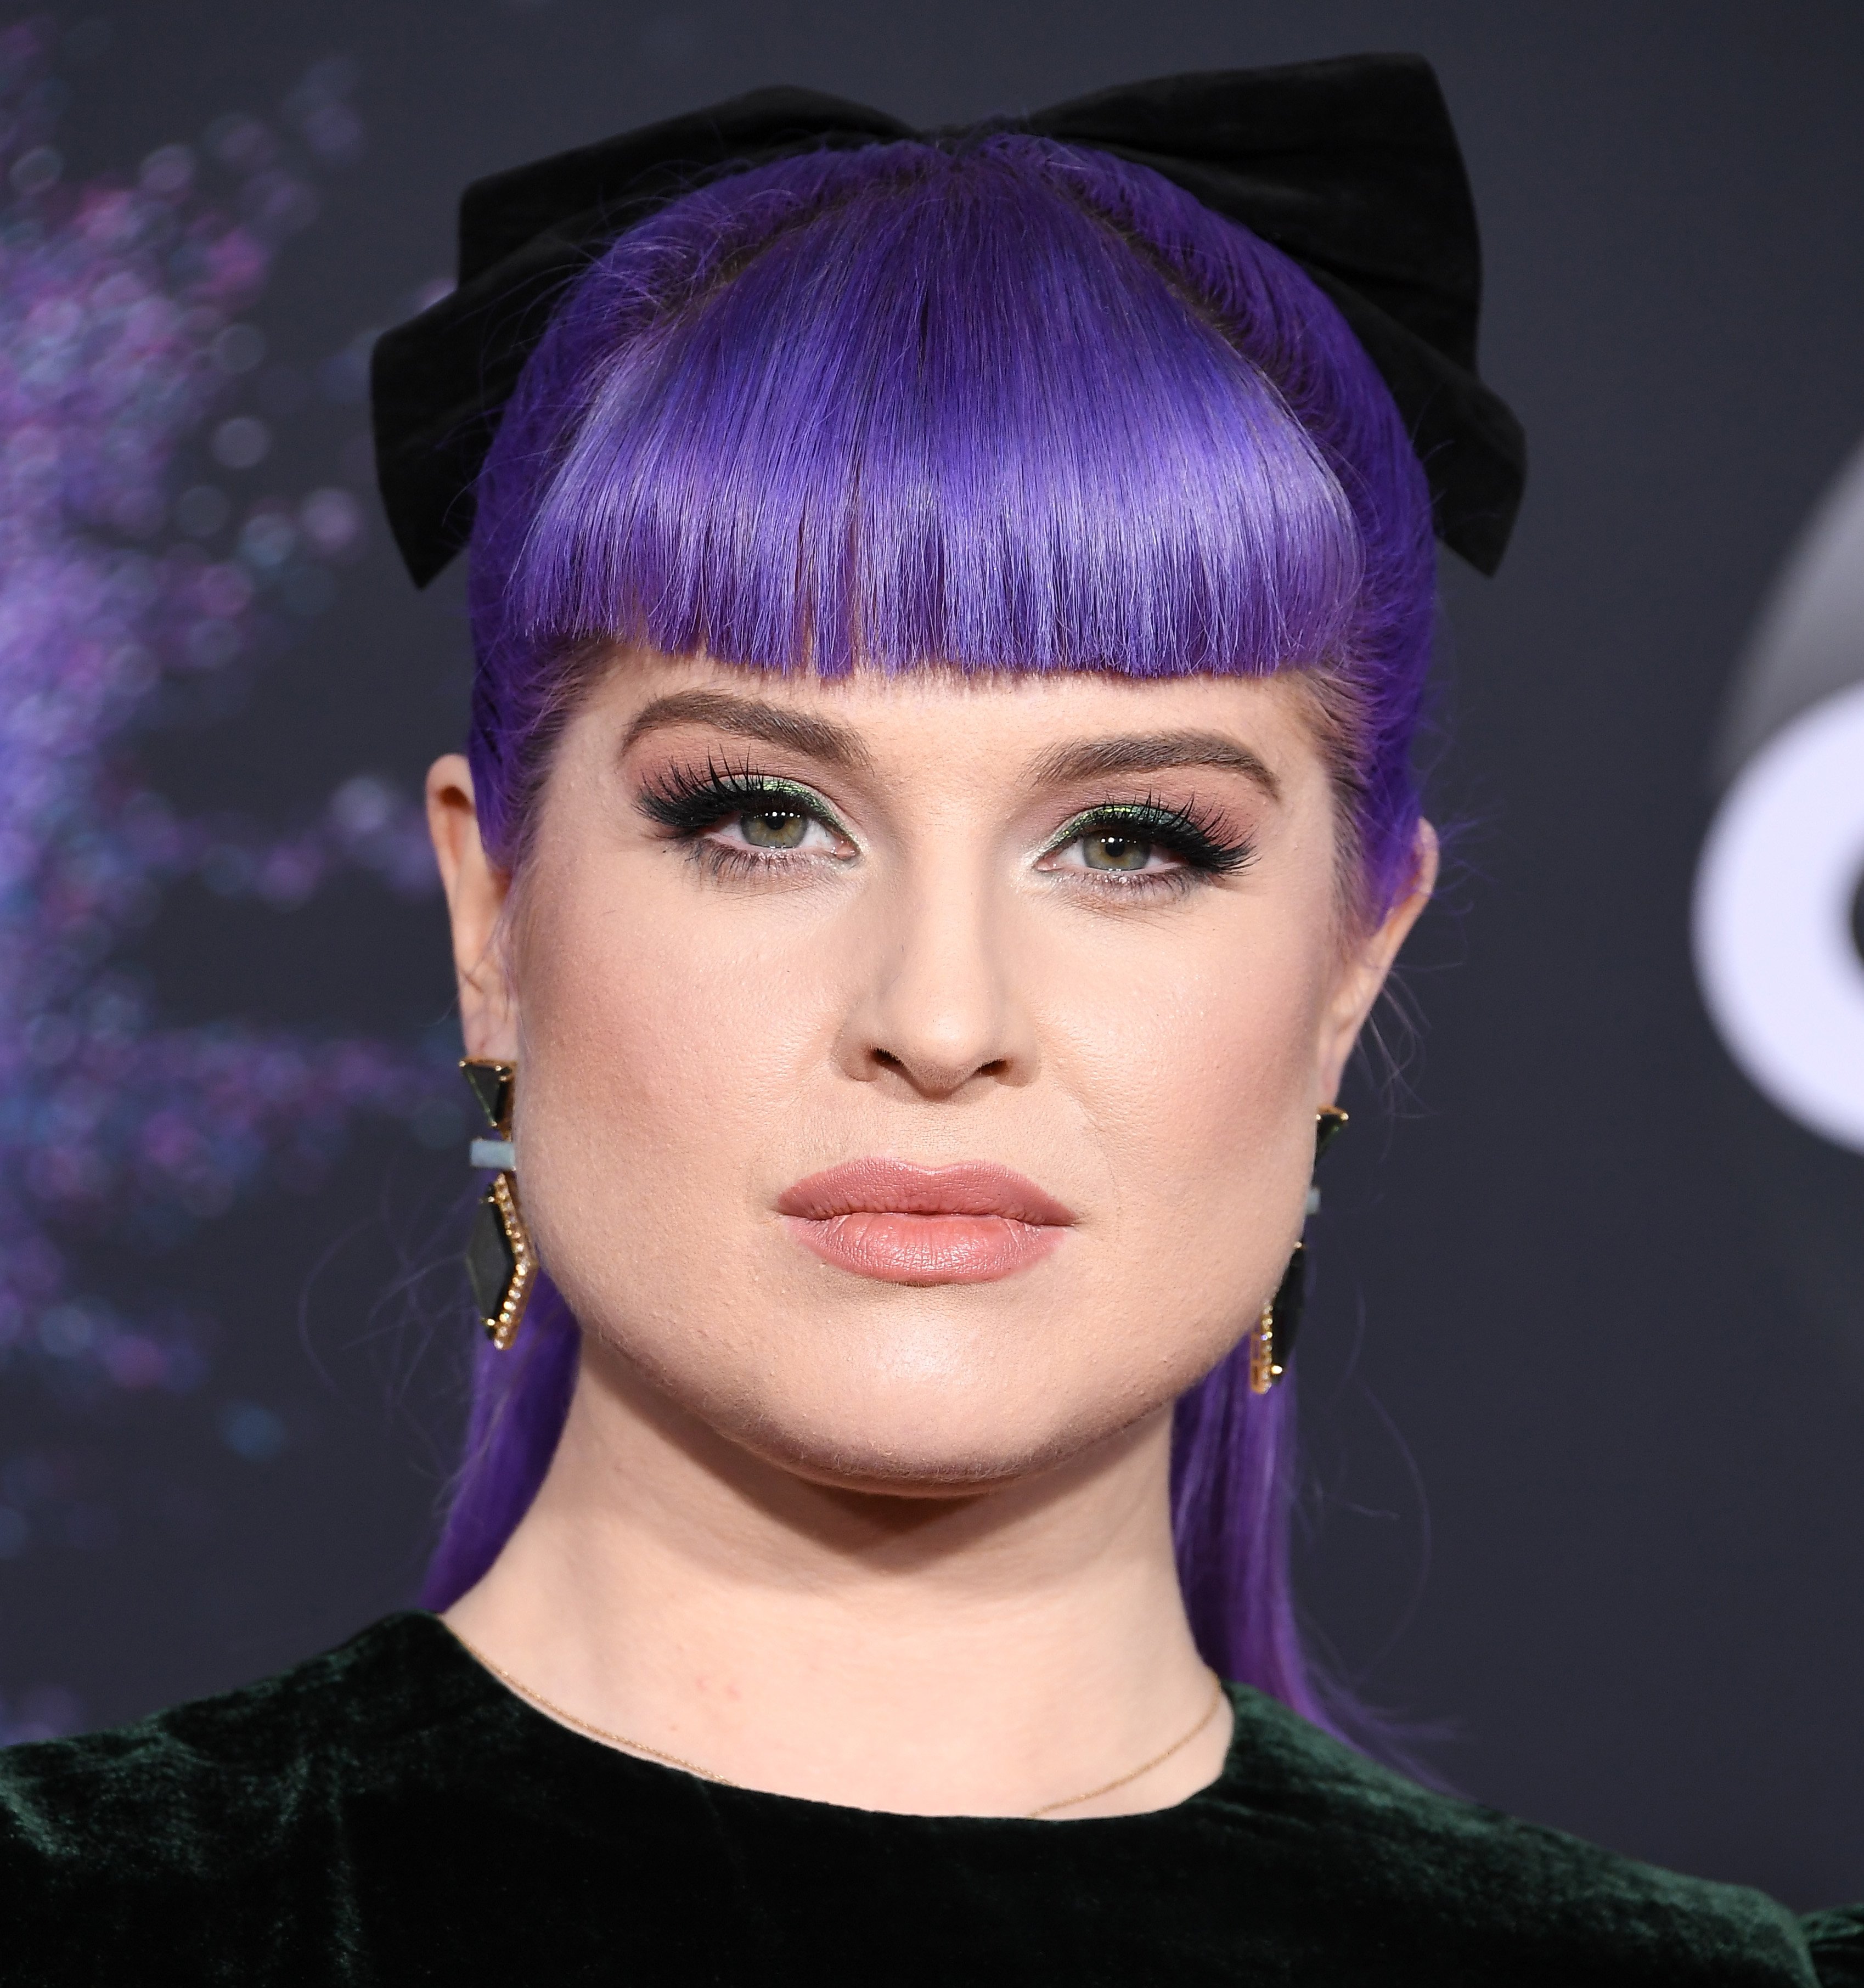 Kelly Osbourne in Los Angeles im Jahr 2019. | Quelle: Getty Images